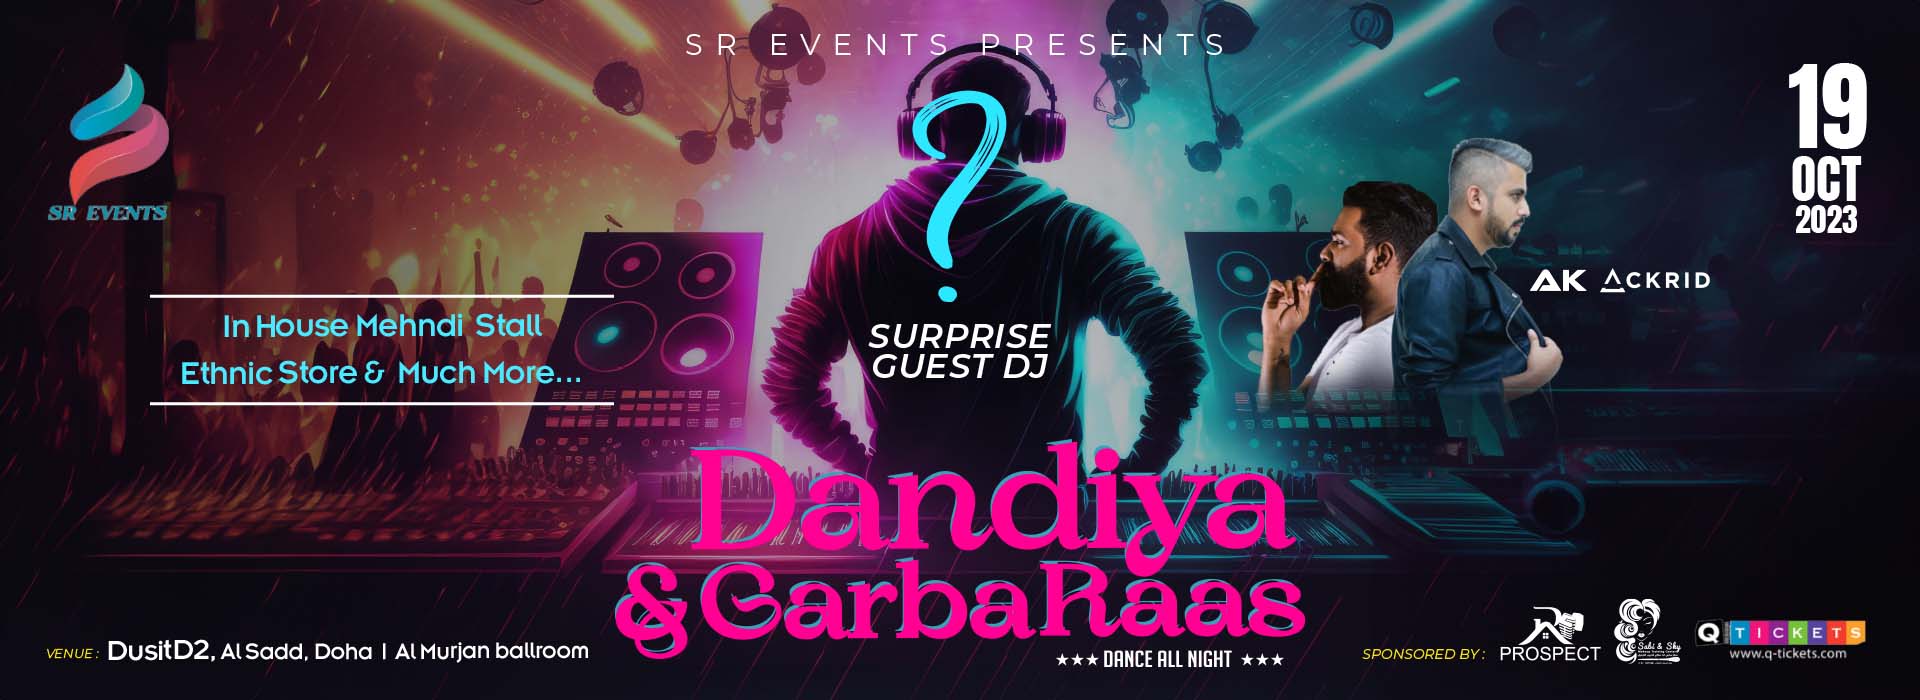 Dandiya & Garba Raas, SR Events